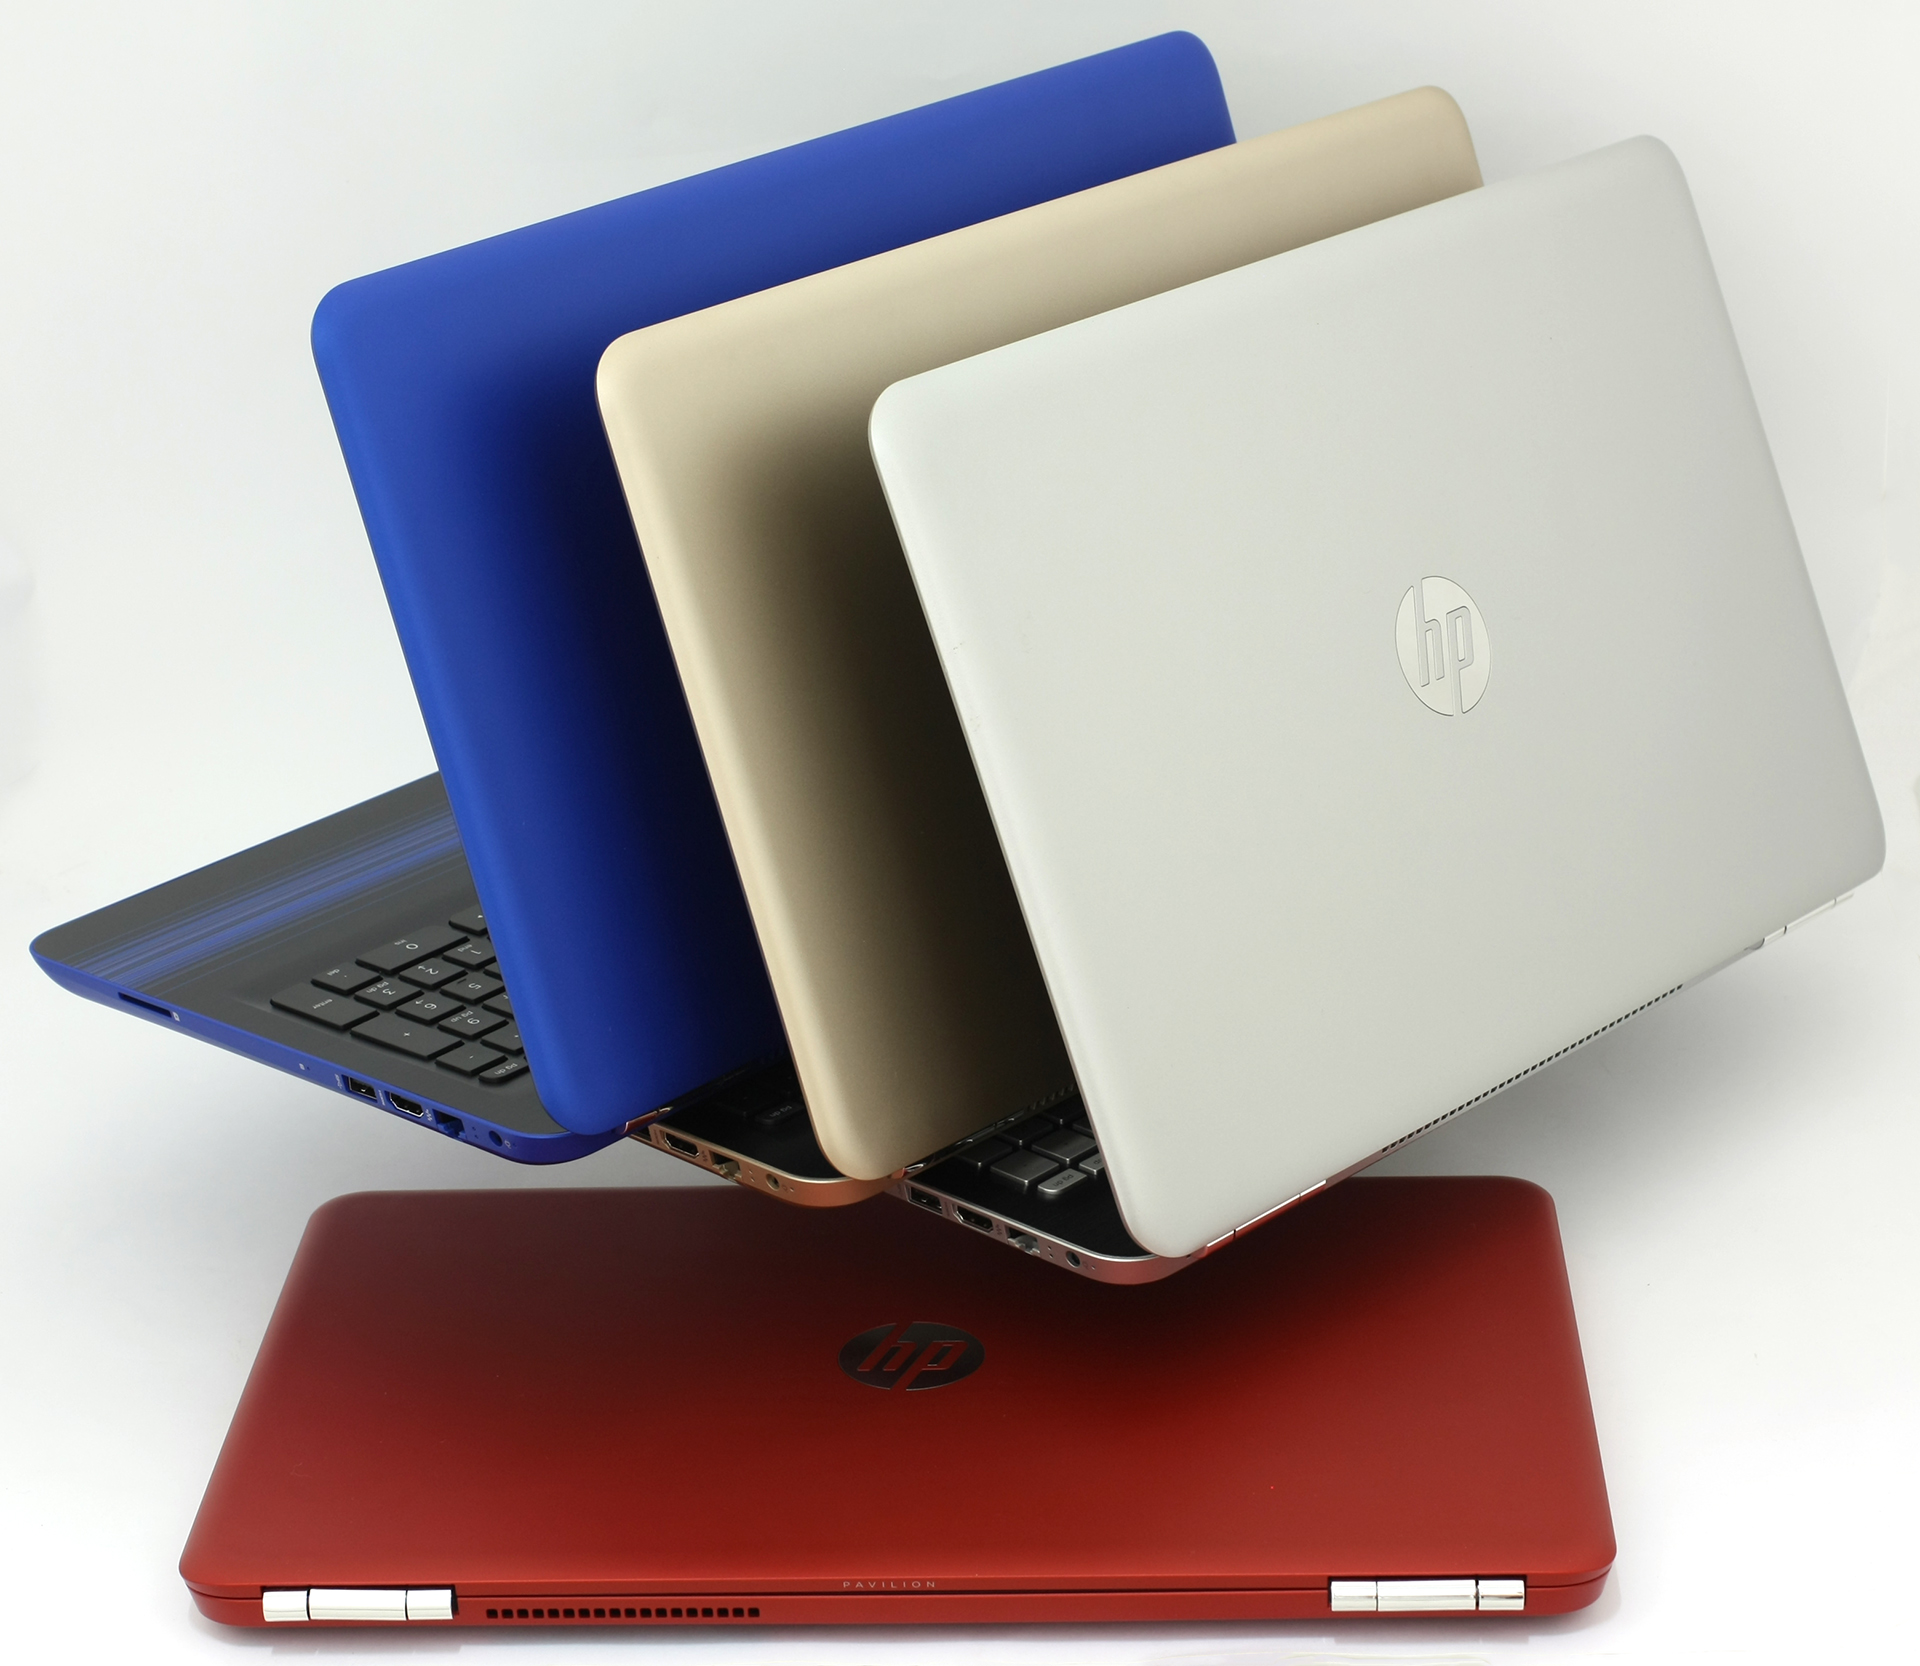 hp laptops models price list